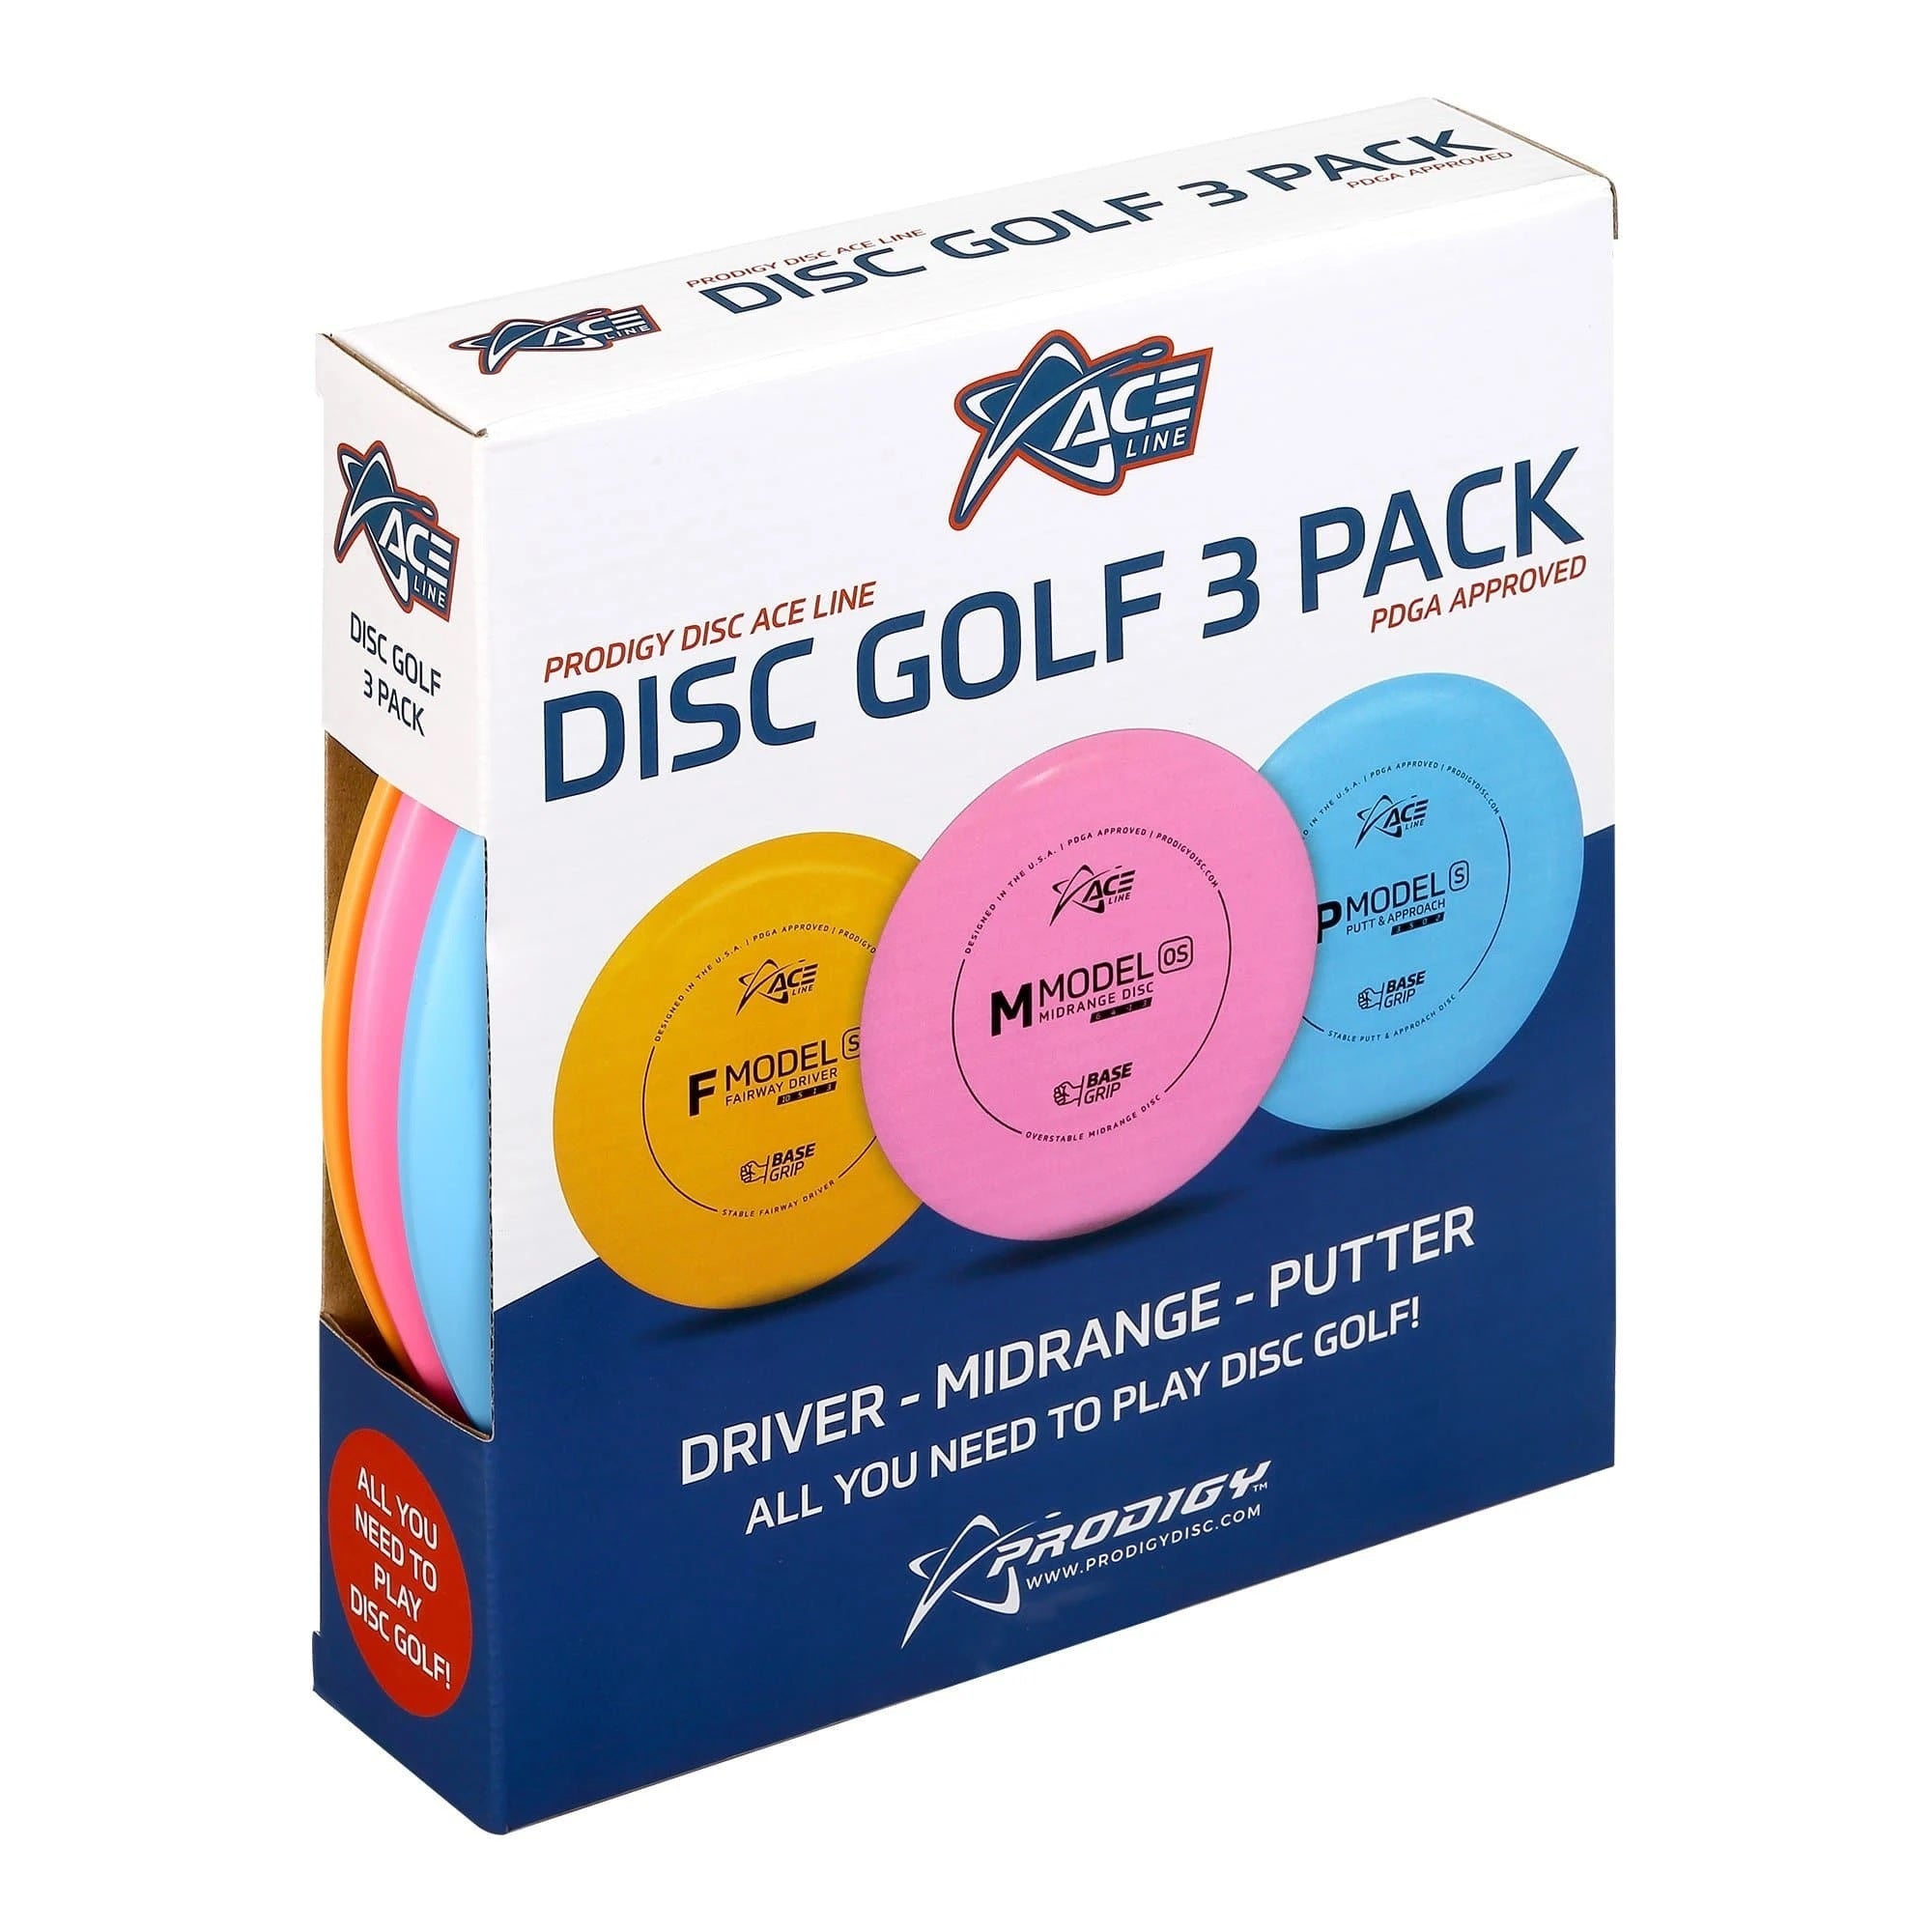 Prodigy Ace Line Disc Golf 3 Pack Set